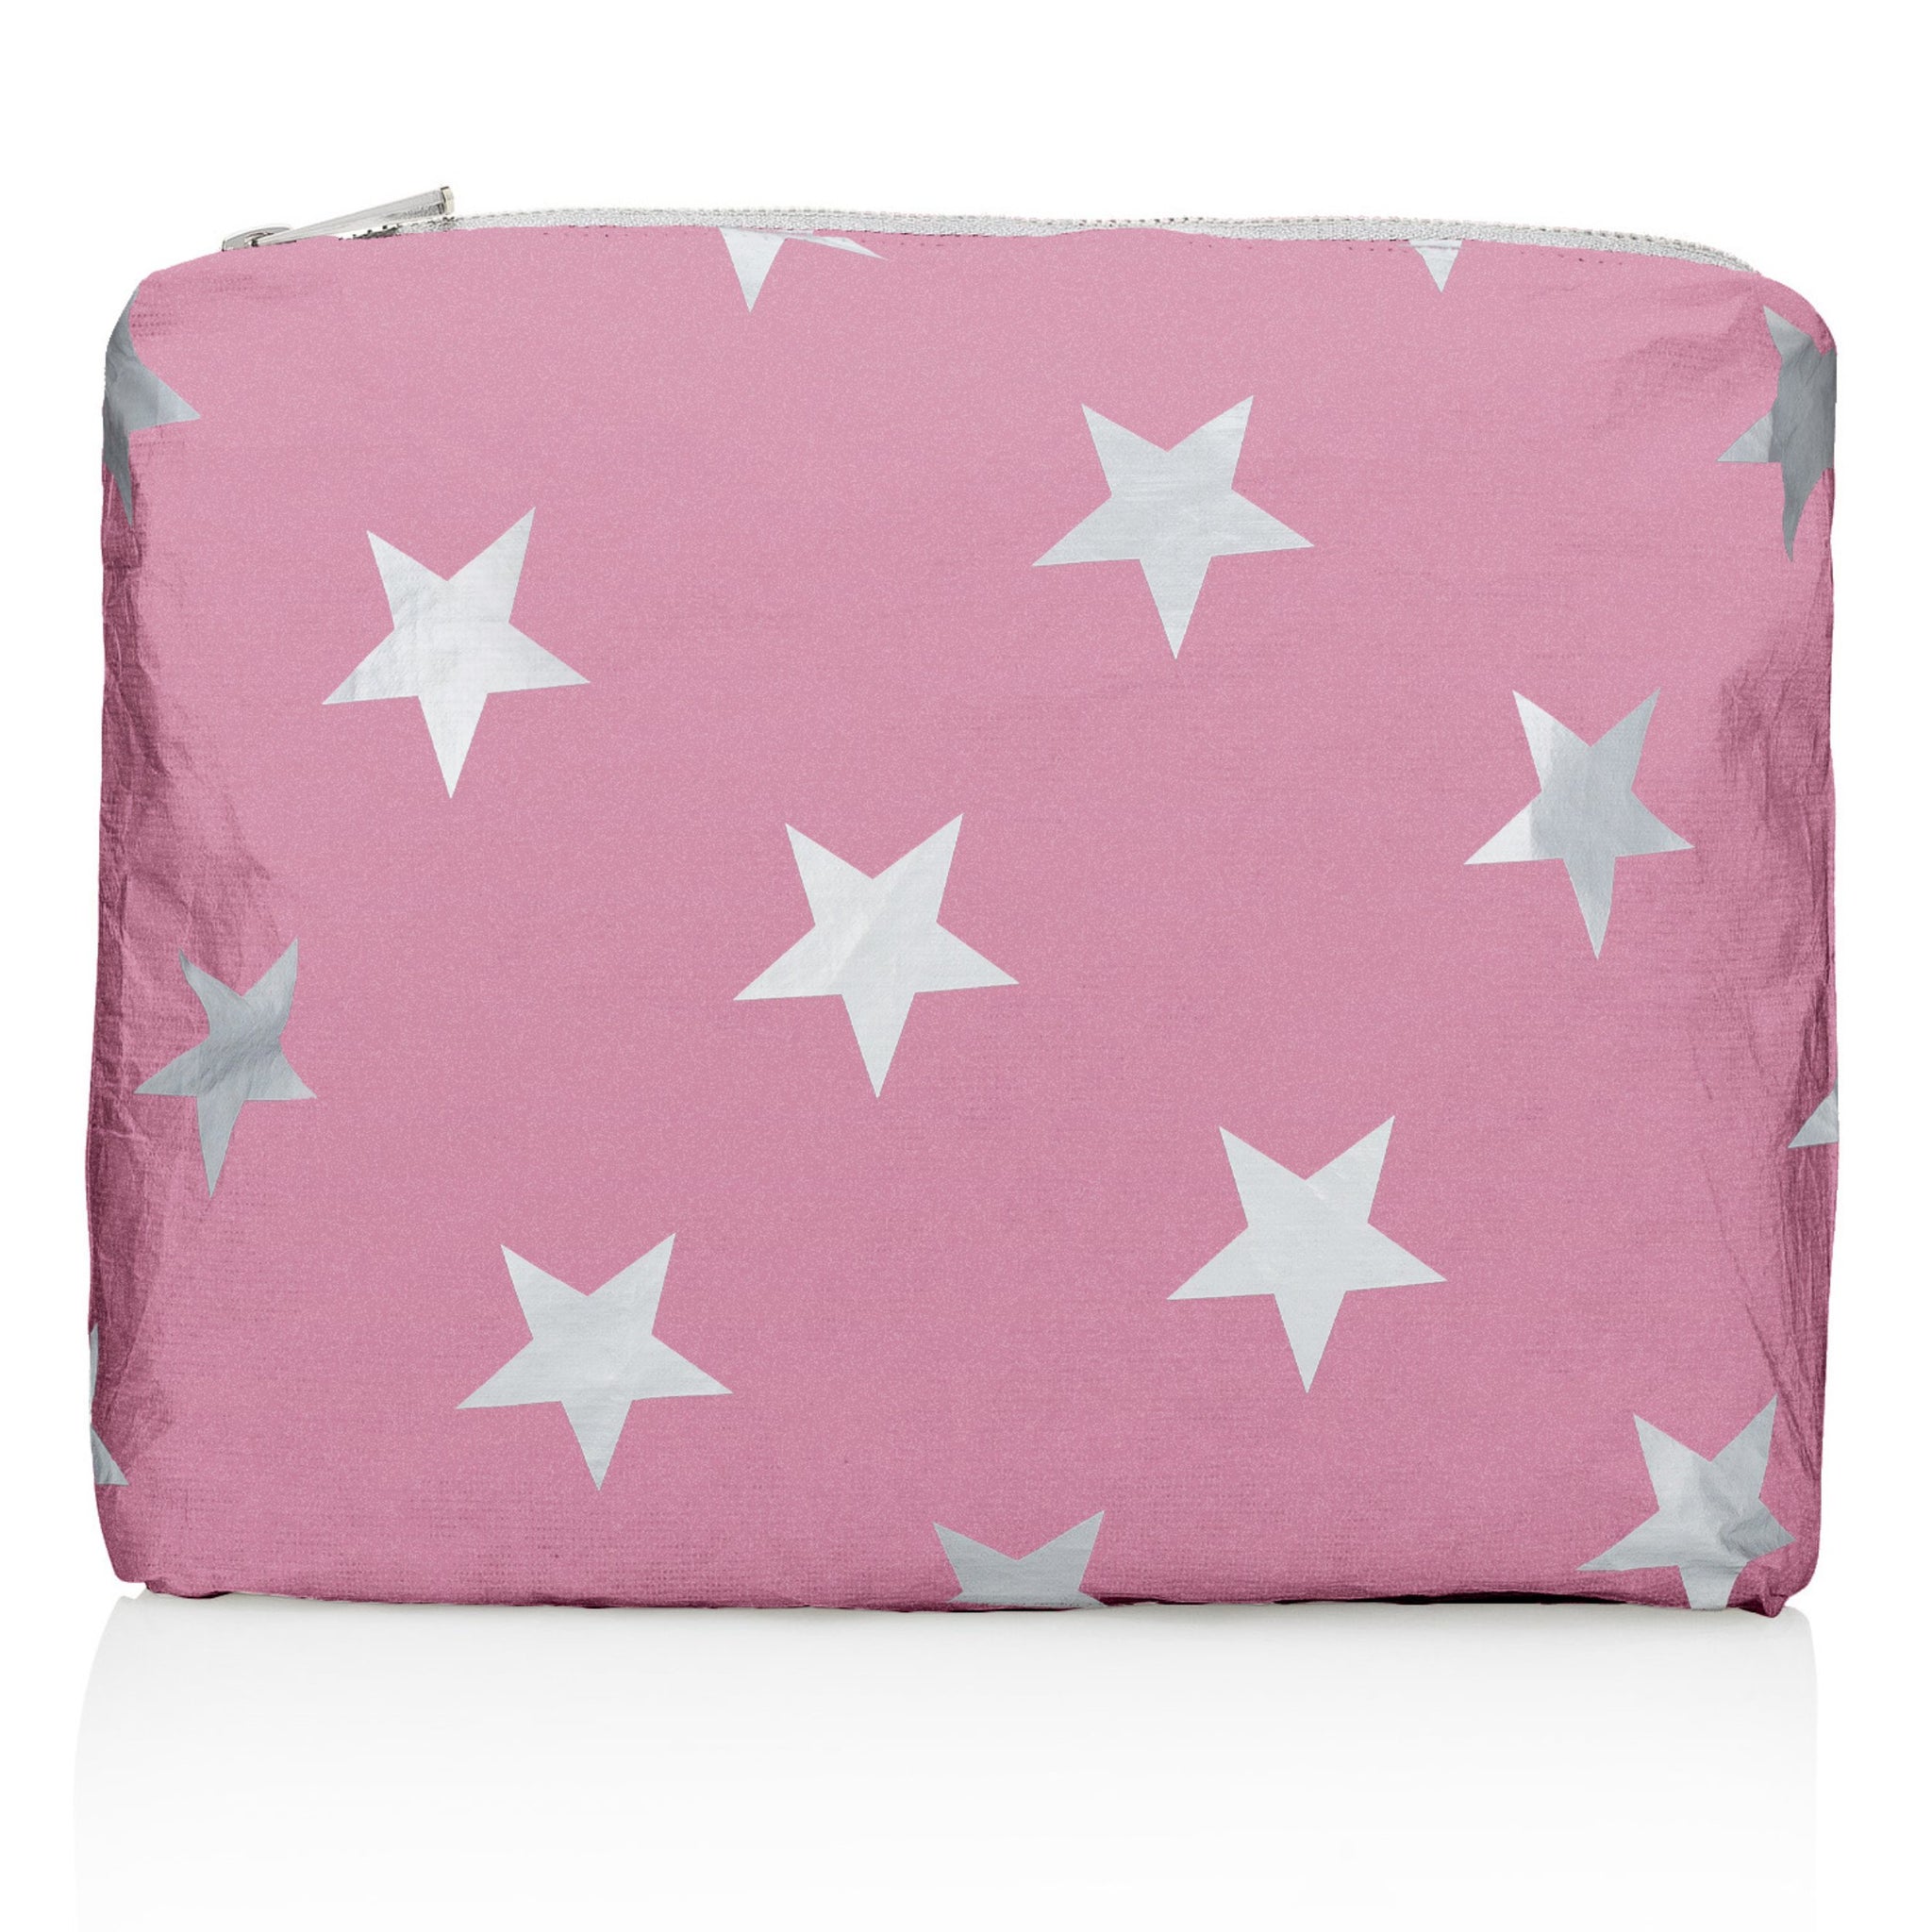 Medium Zipper Pack in Fairy Pink with Multi Silver Stars